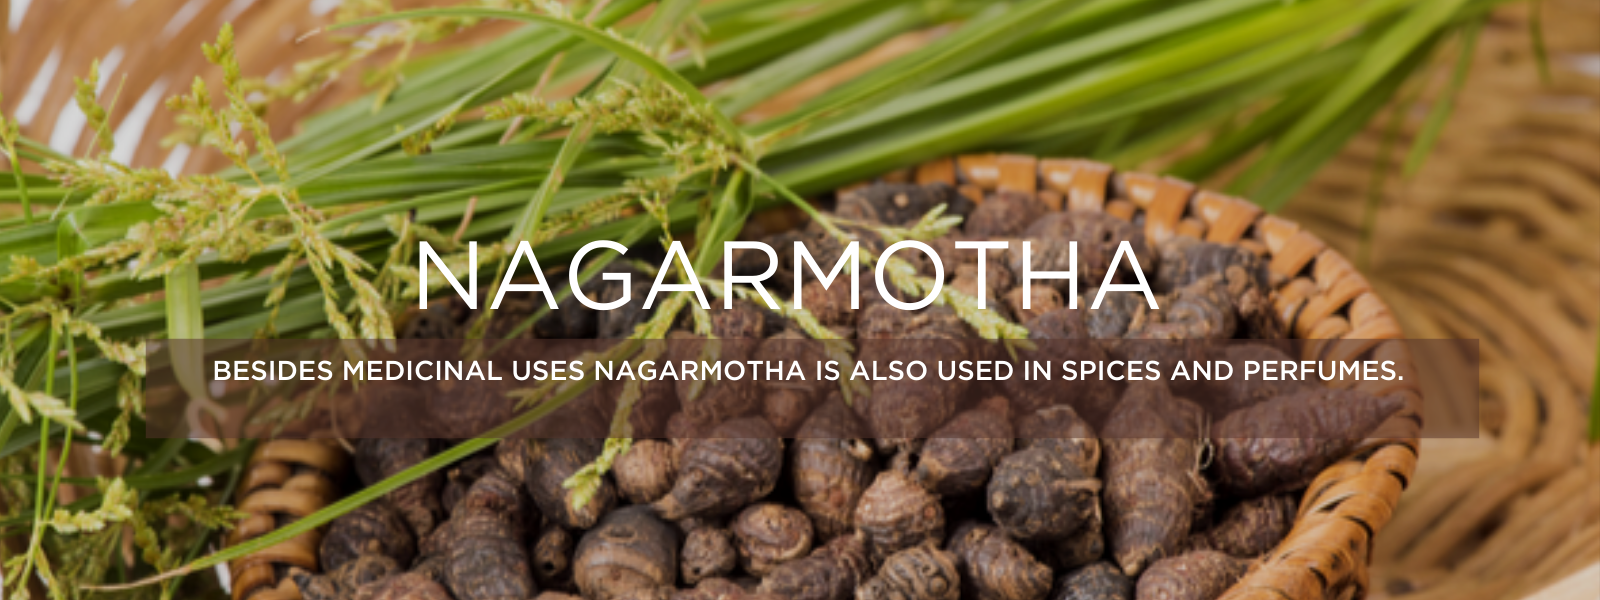 Nagarmotha- Health Benefits, Uses and Important Facts